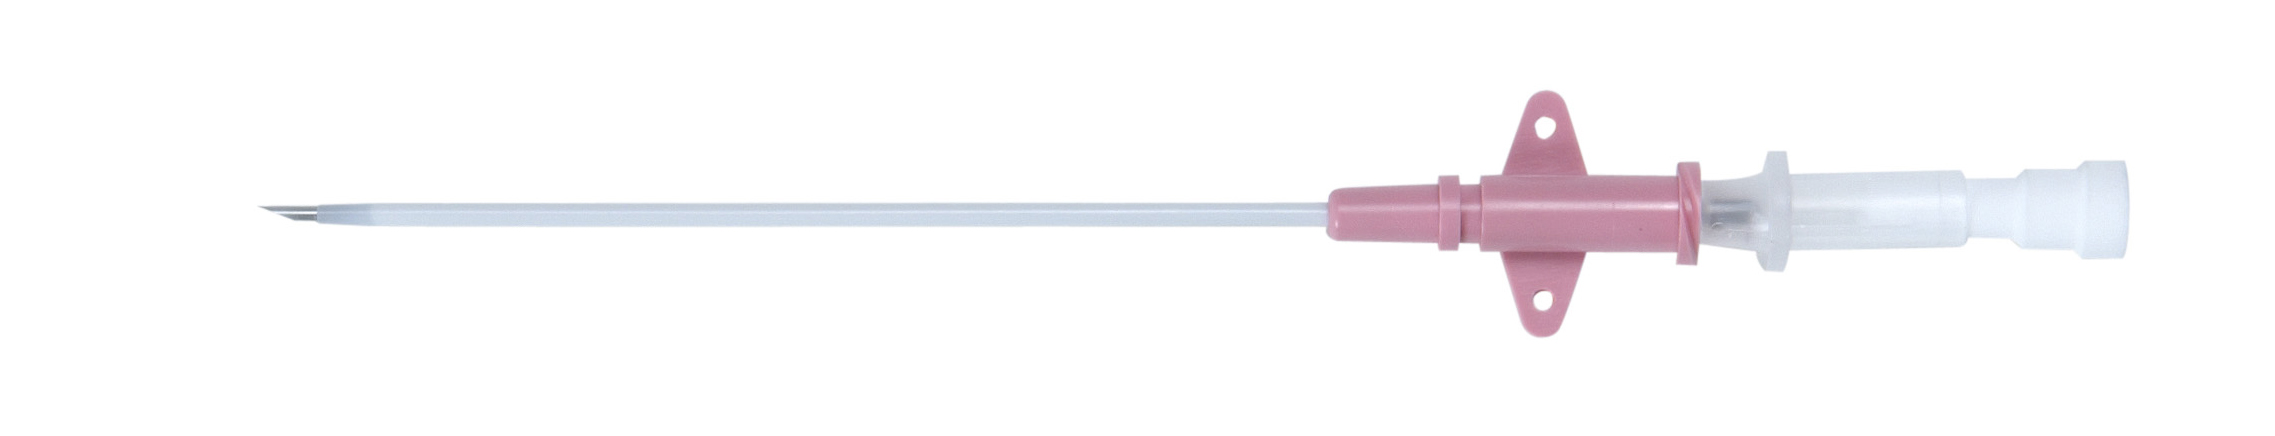 EQUIVET HiFlow LongTerm IV Catheter 16G x 3.00